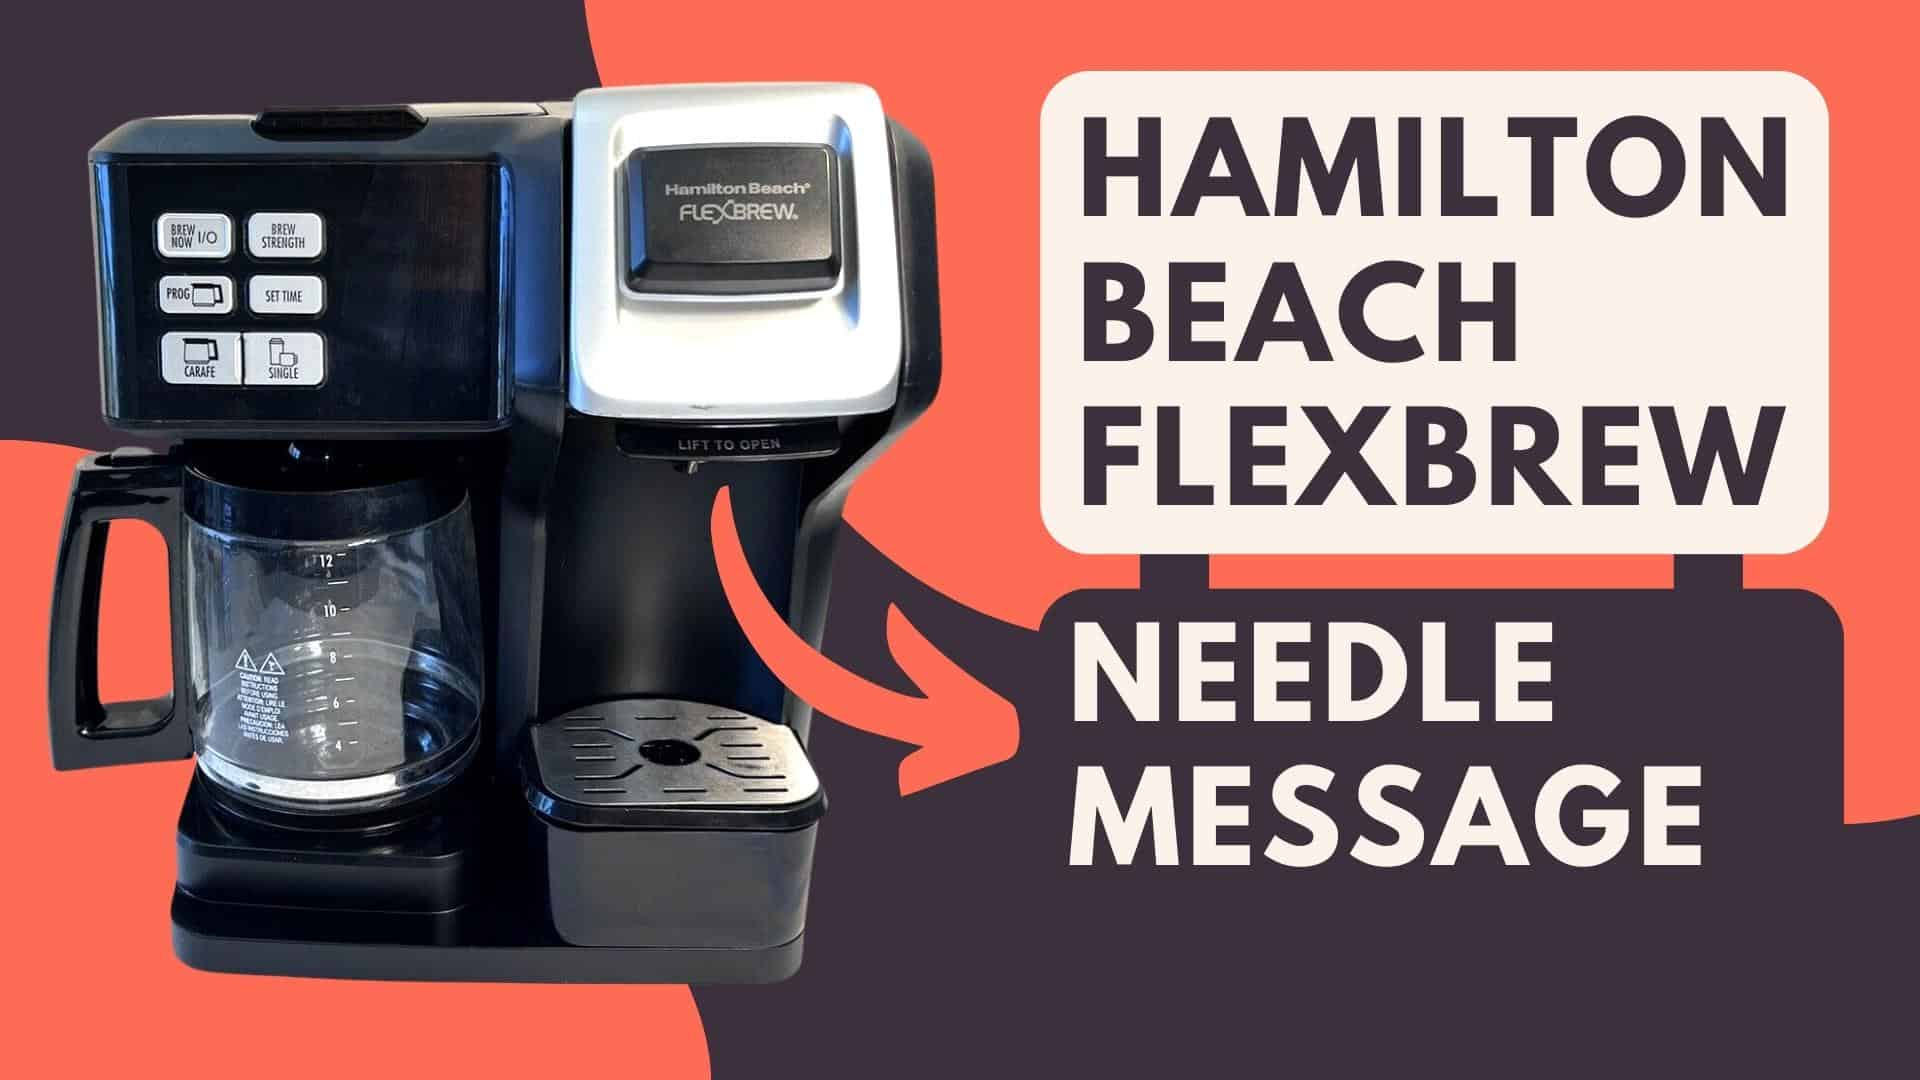 Hamilton Beach Flexbrew needle Message